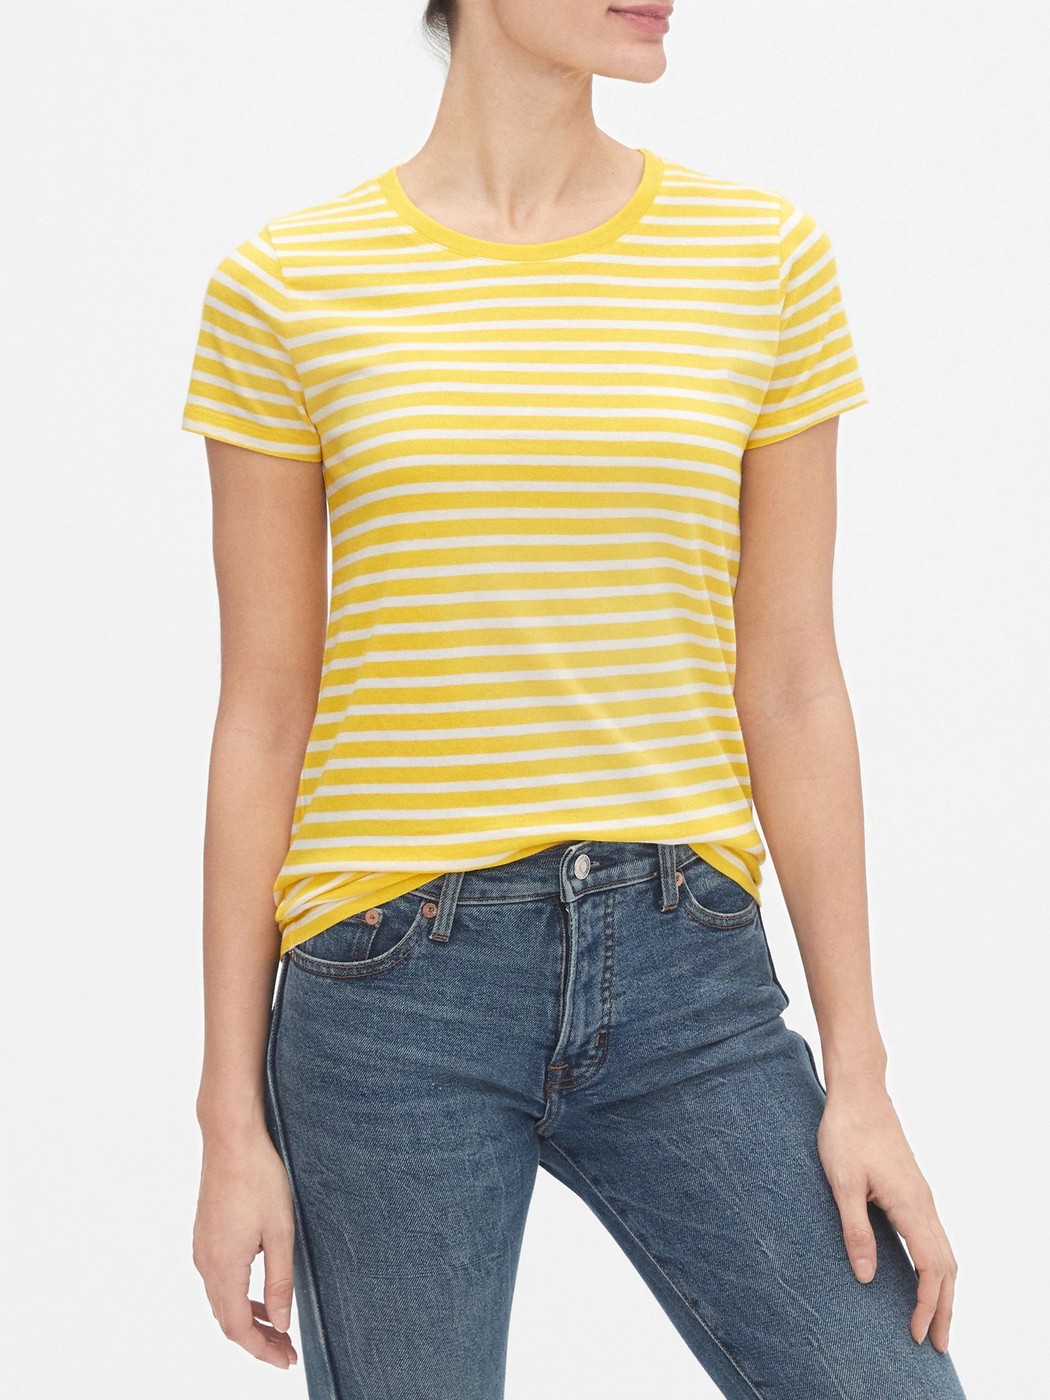 Желтая футболка - женская футболка GAP, M, M